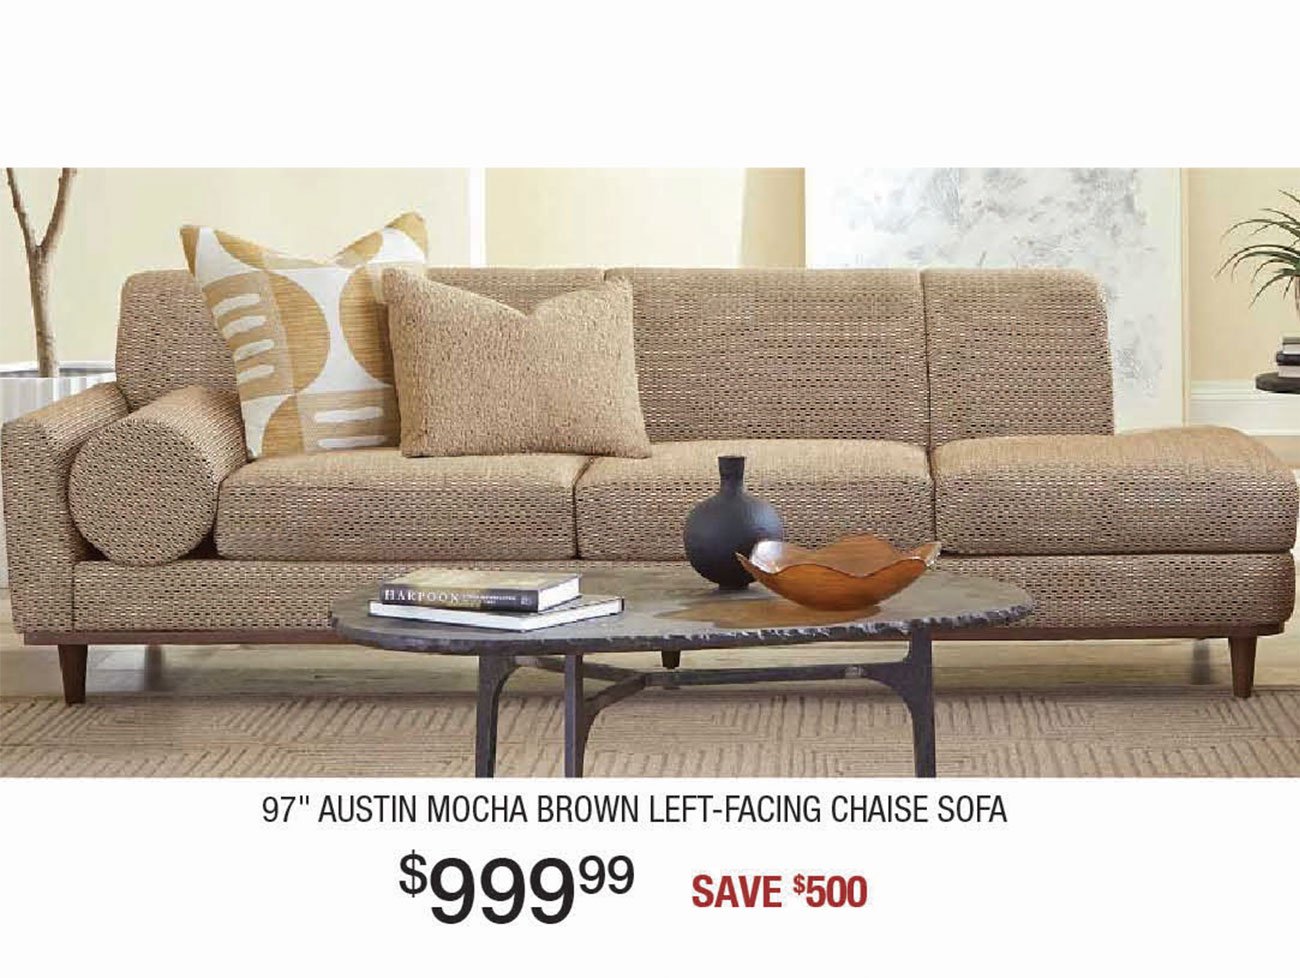 Austin-Mocha-Left-Facing-Chaise-Sofa